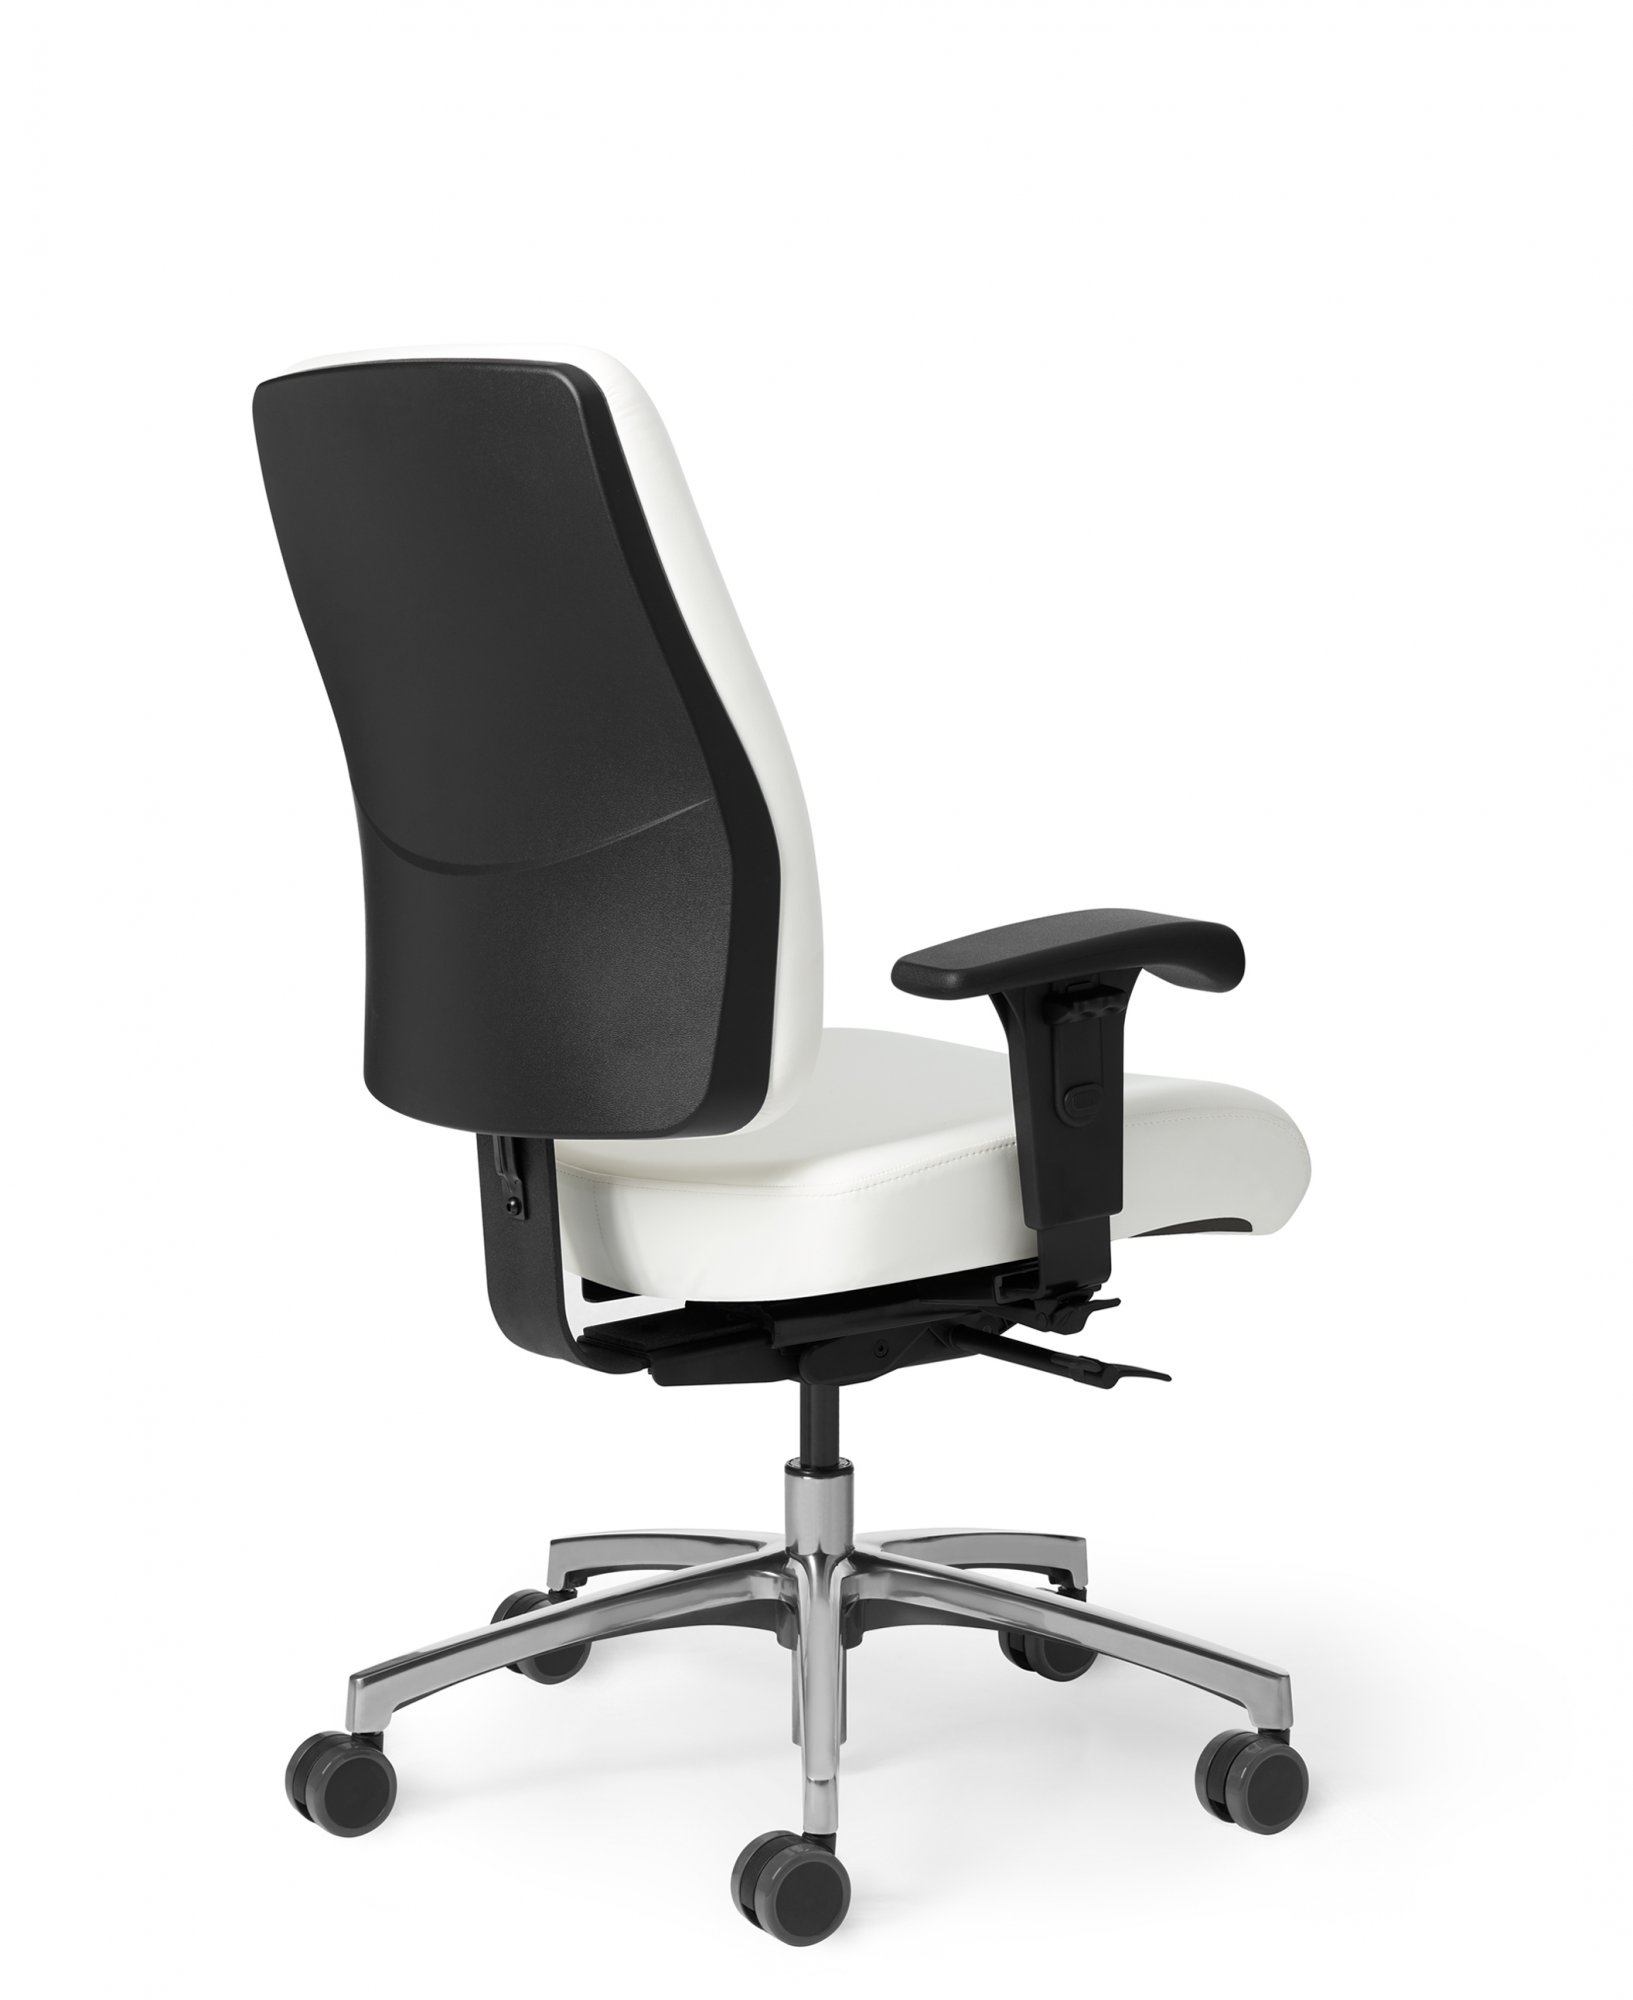 Back View - Office Master AF468 Affirm Chair